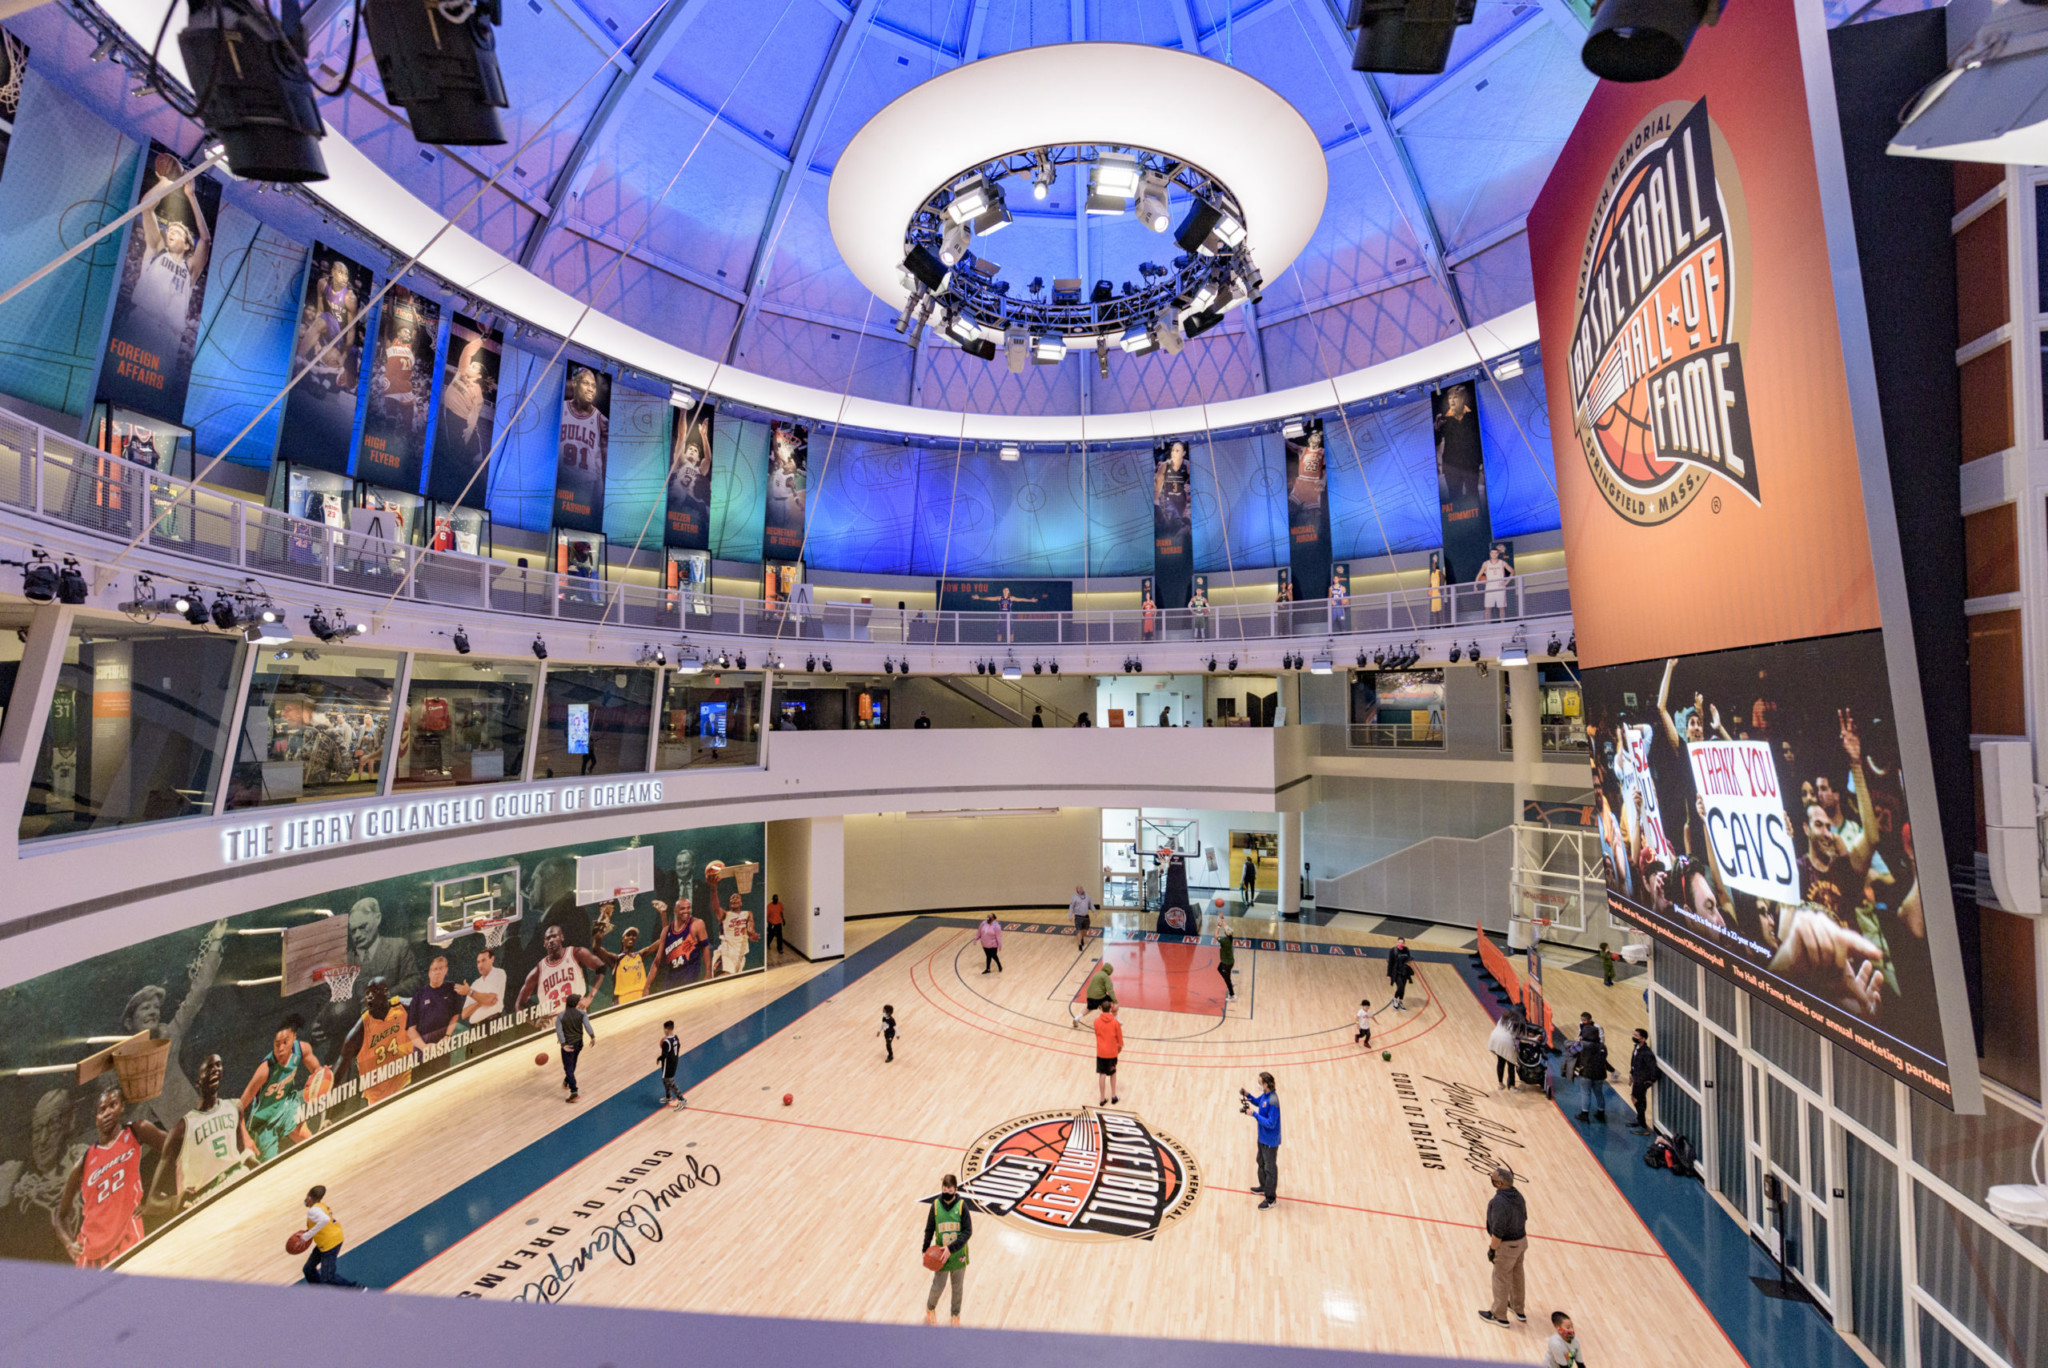 Naismith Memorial Basketball Hall of Fame Opens After Renovation